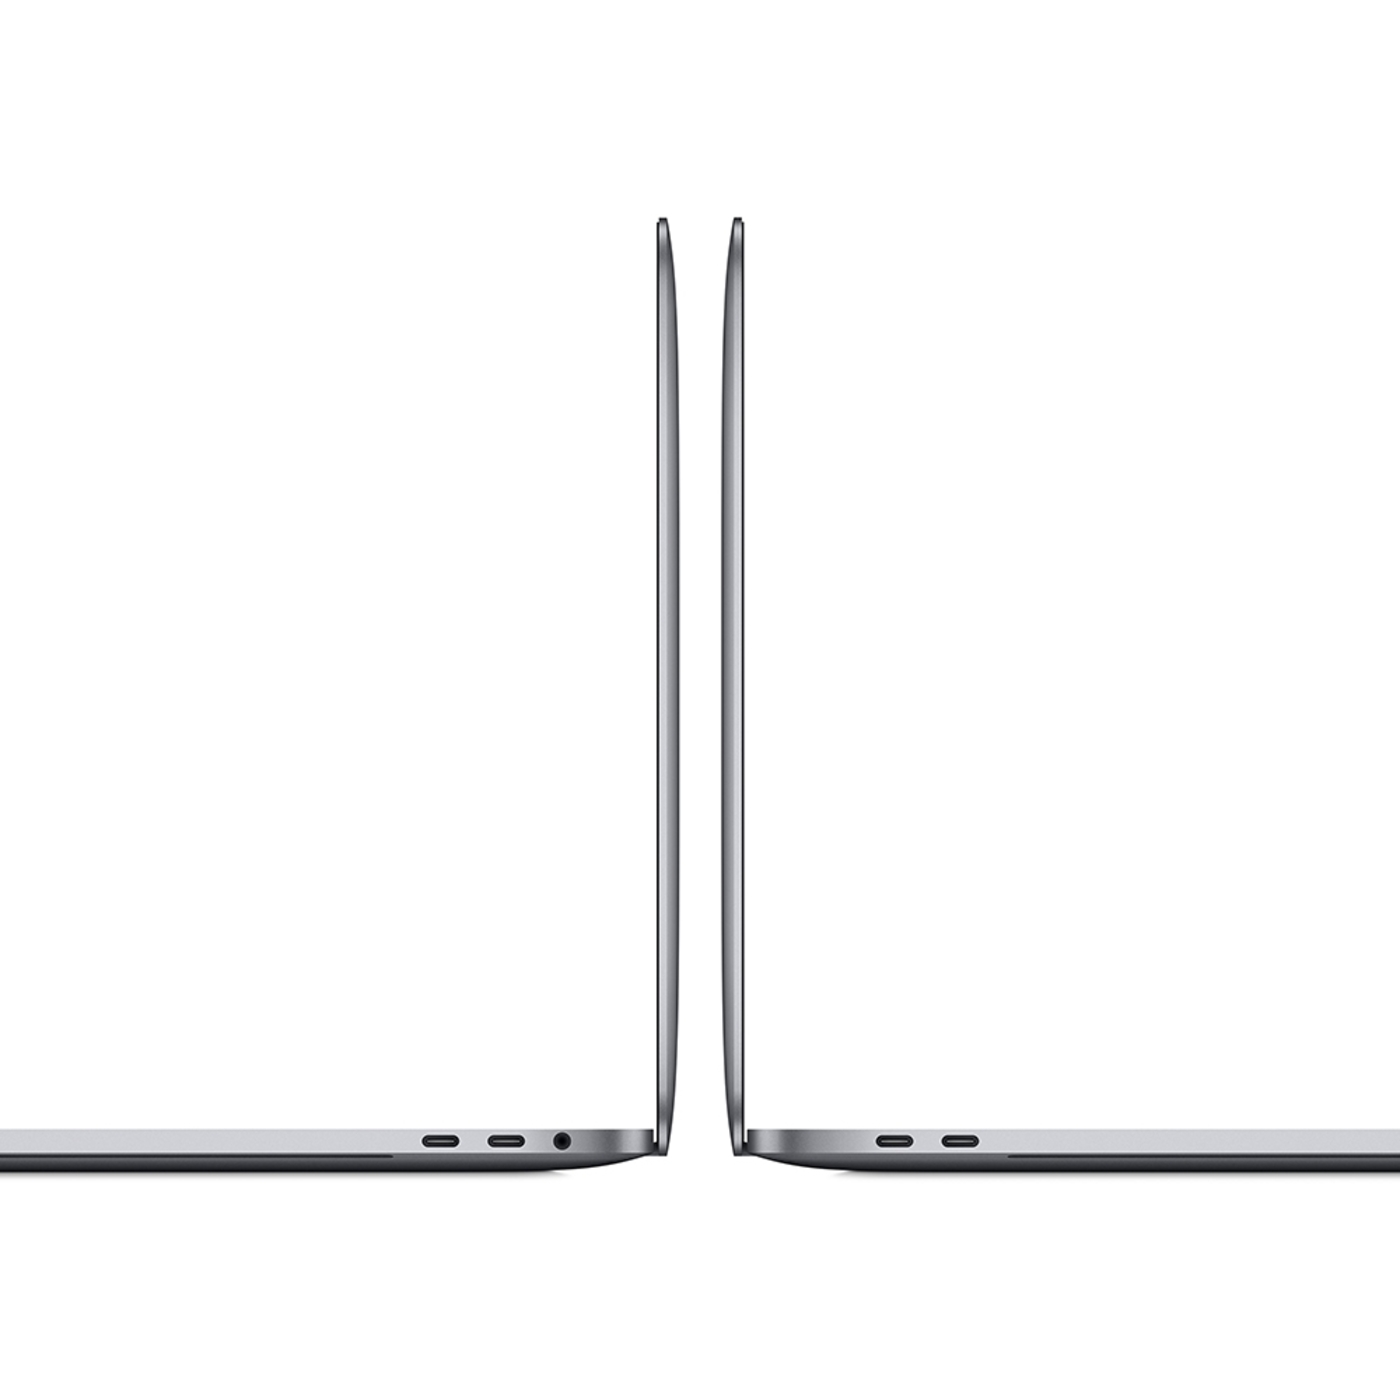 Macbook Pro 13.3" Pulgadas Touch Bar Intel Core i5 512 GB RAM 16GB 2.0GHz Gris